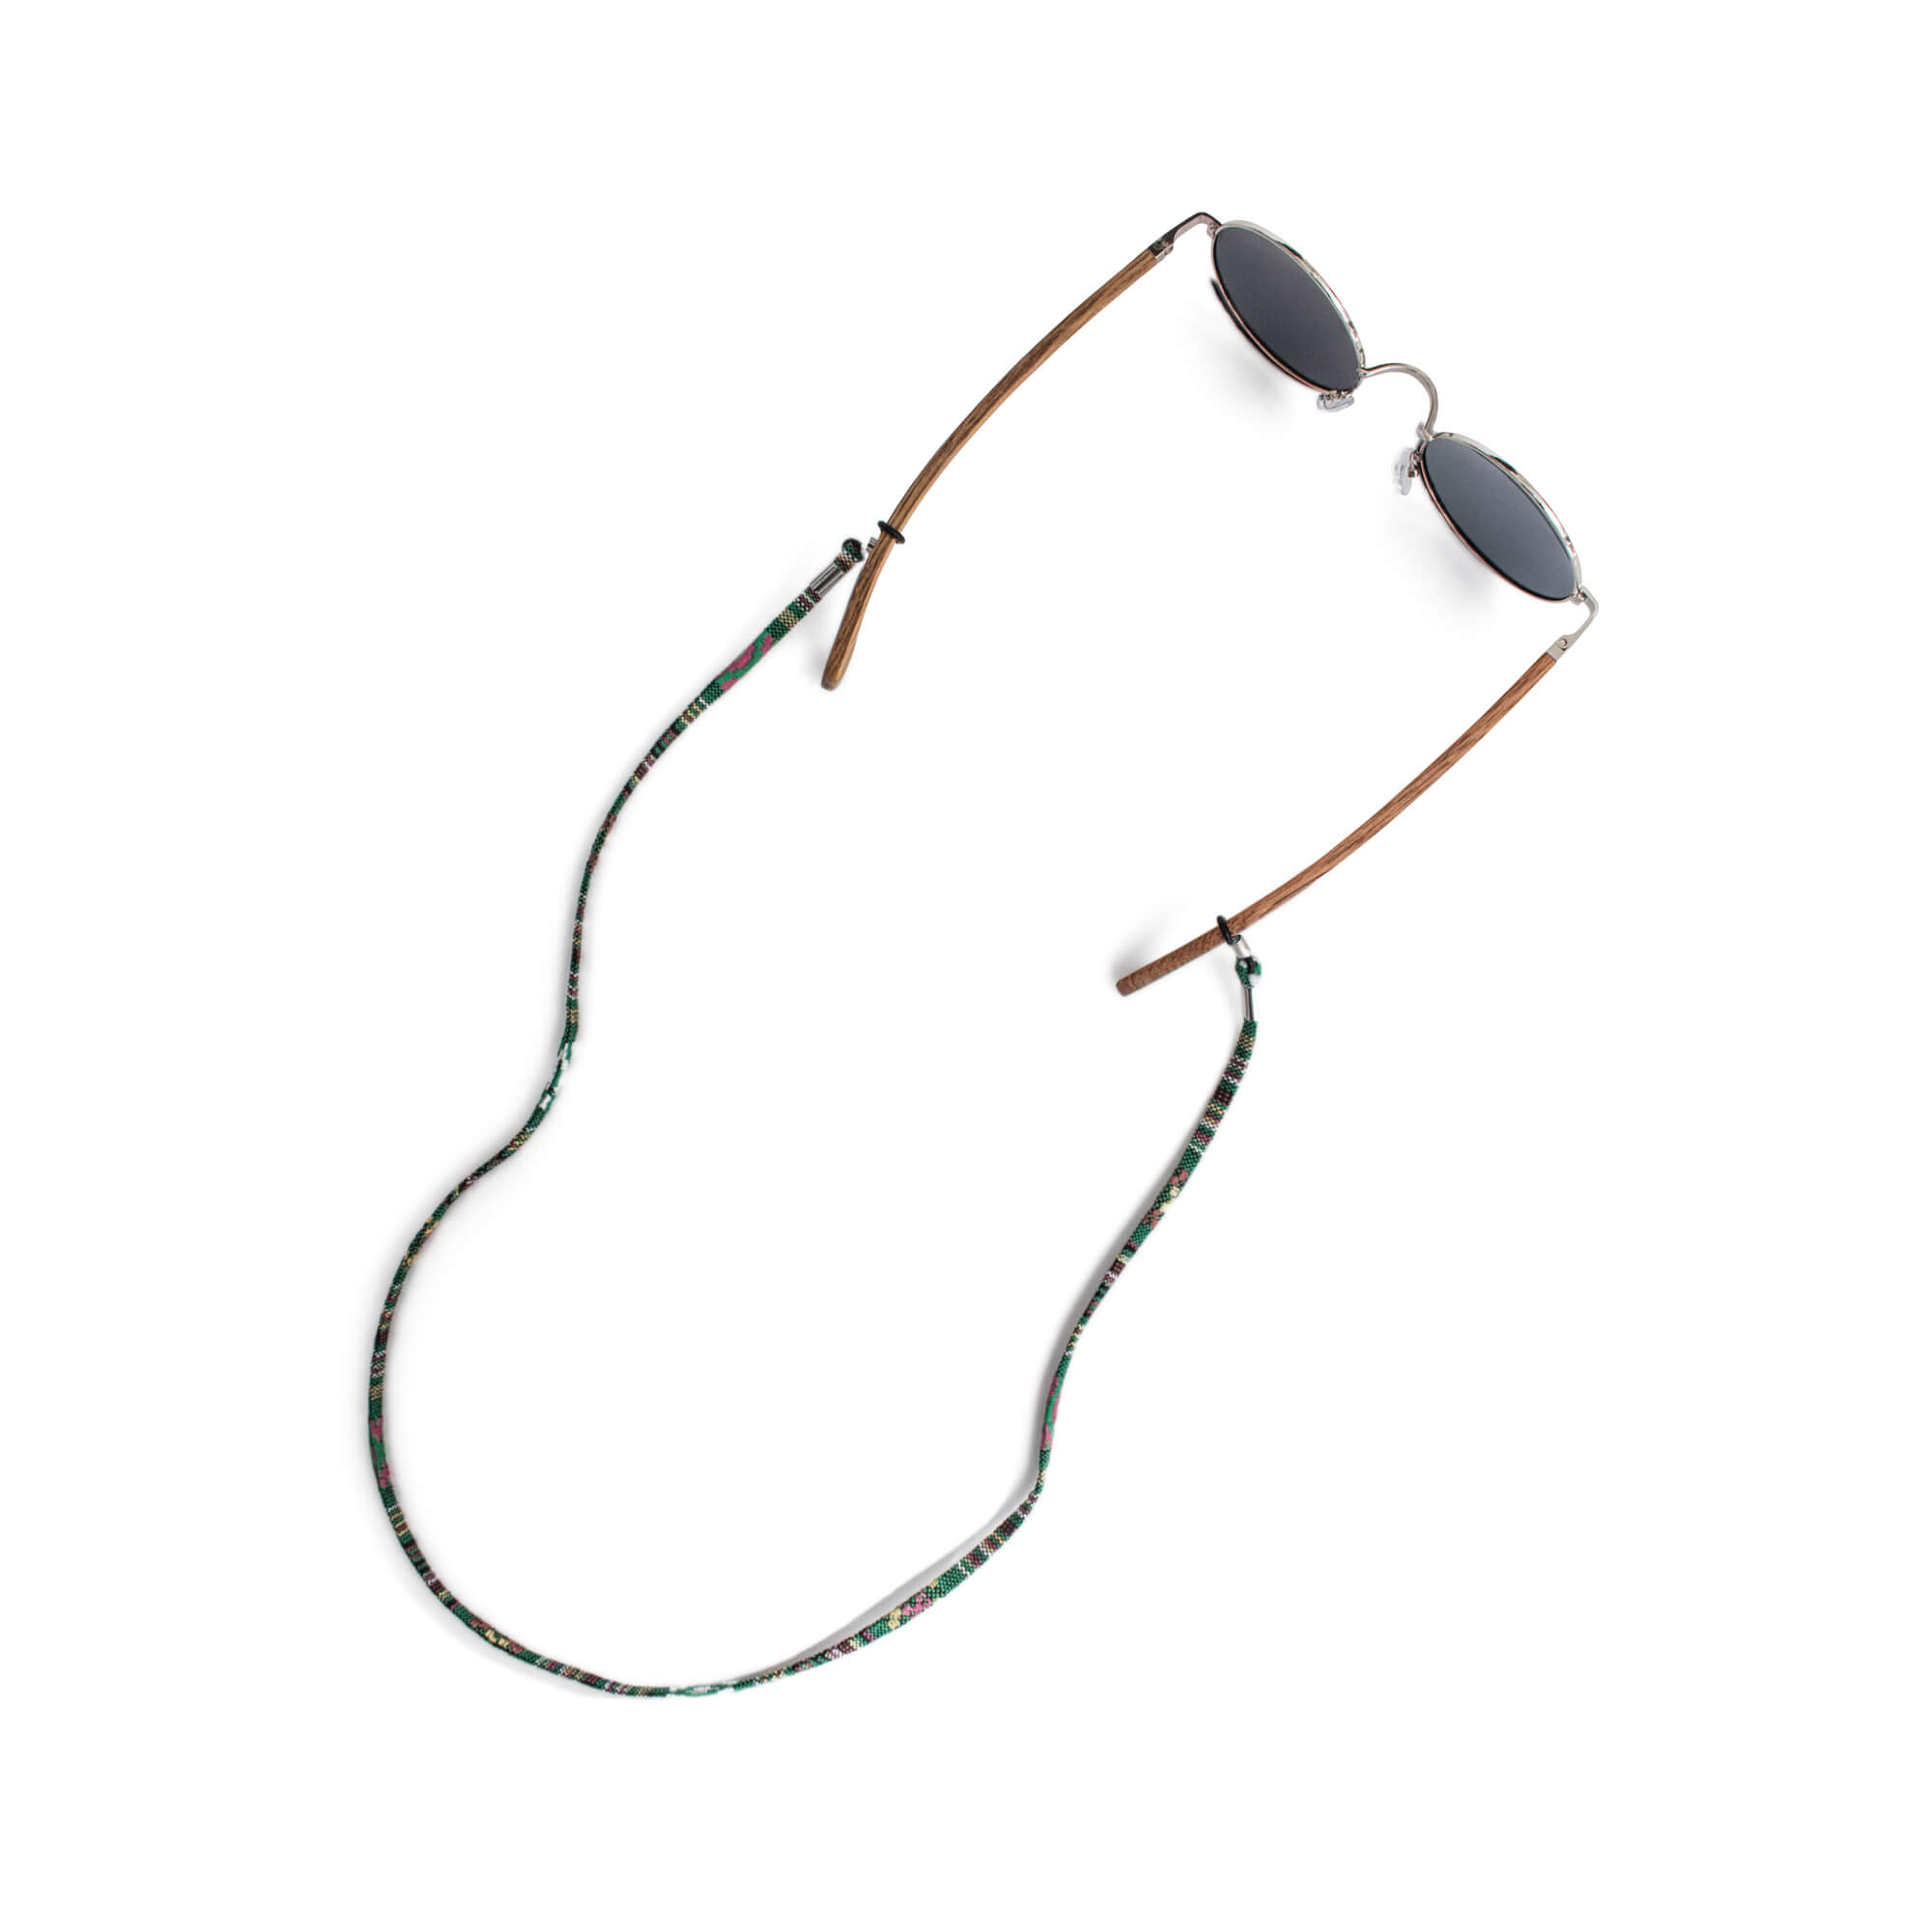 Eyewear Chain - Green Rope Glasses Lanyard